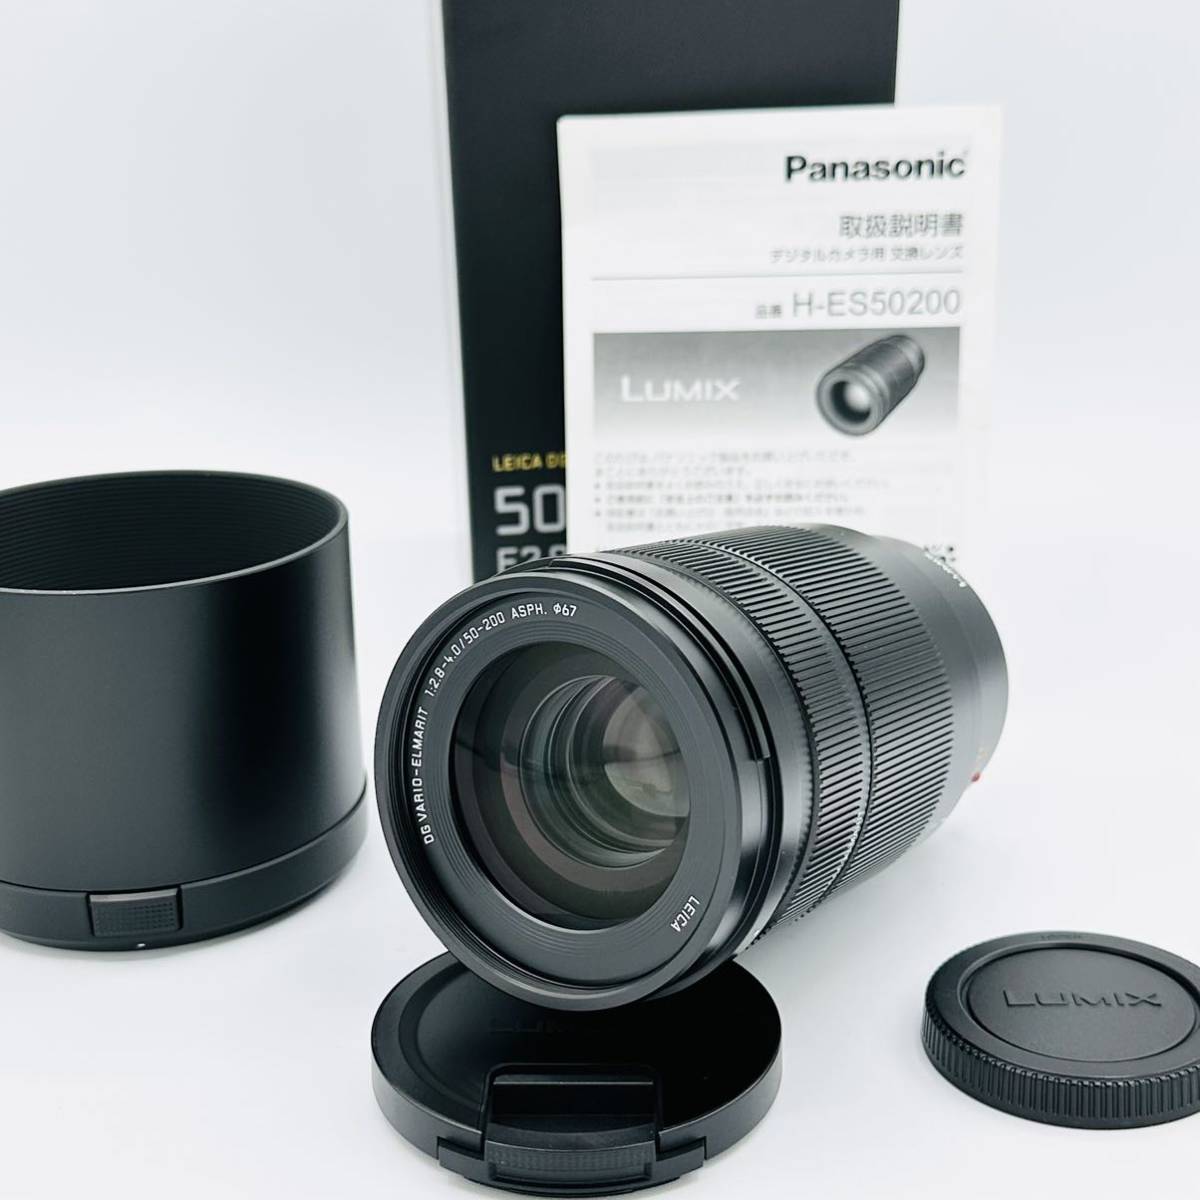 [ almost new ] Panasonic zoom lens micro four sa-z for Leica DG VARIO-ELMARIT 50-200mm/F2.8-4.0 ASPH./POWER O.I.S. H-ES50200